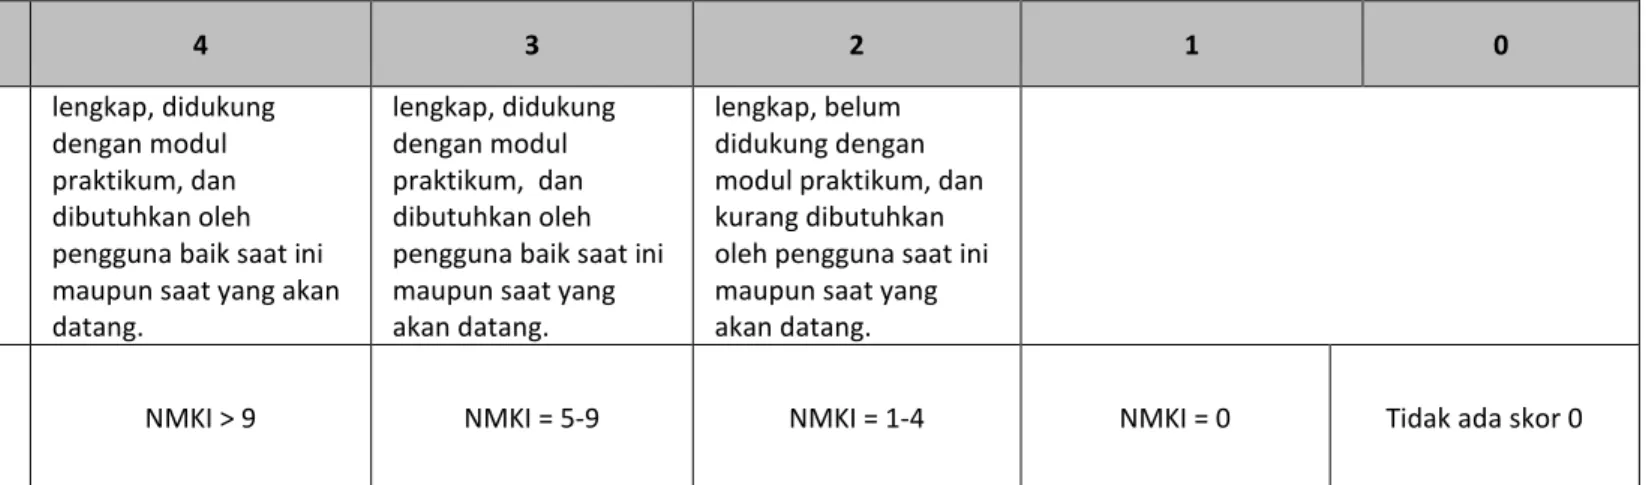 Tabel 6.b LKPS  (Lihat untuk program  sarjana) 